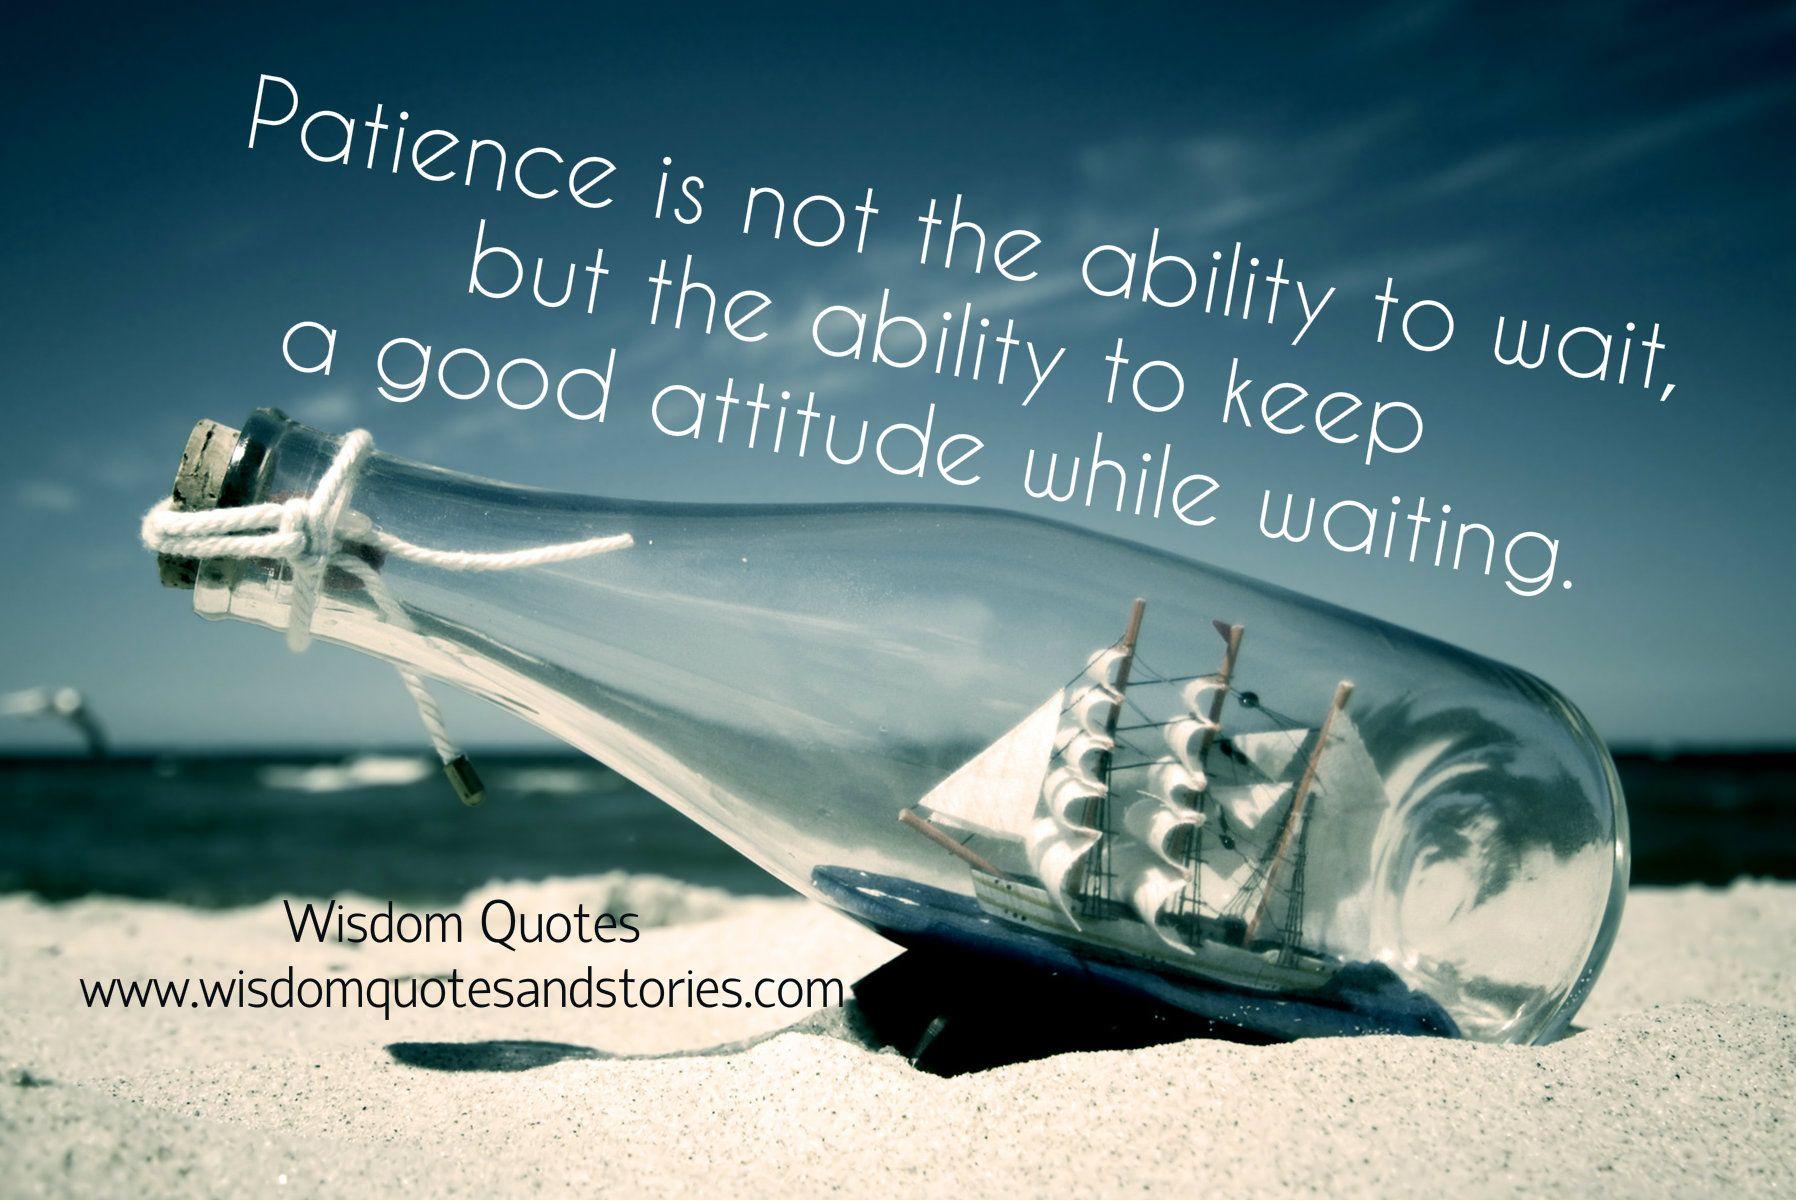 Keep good attitude while waiting